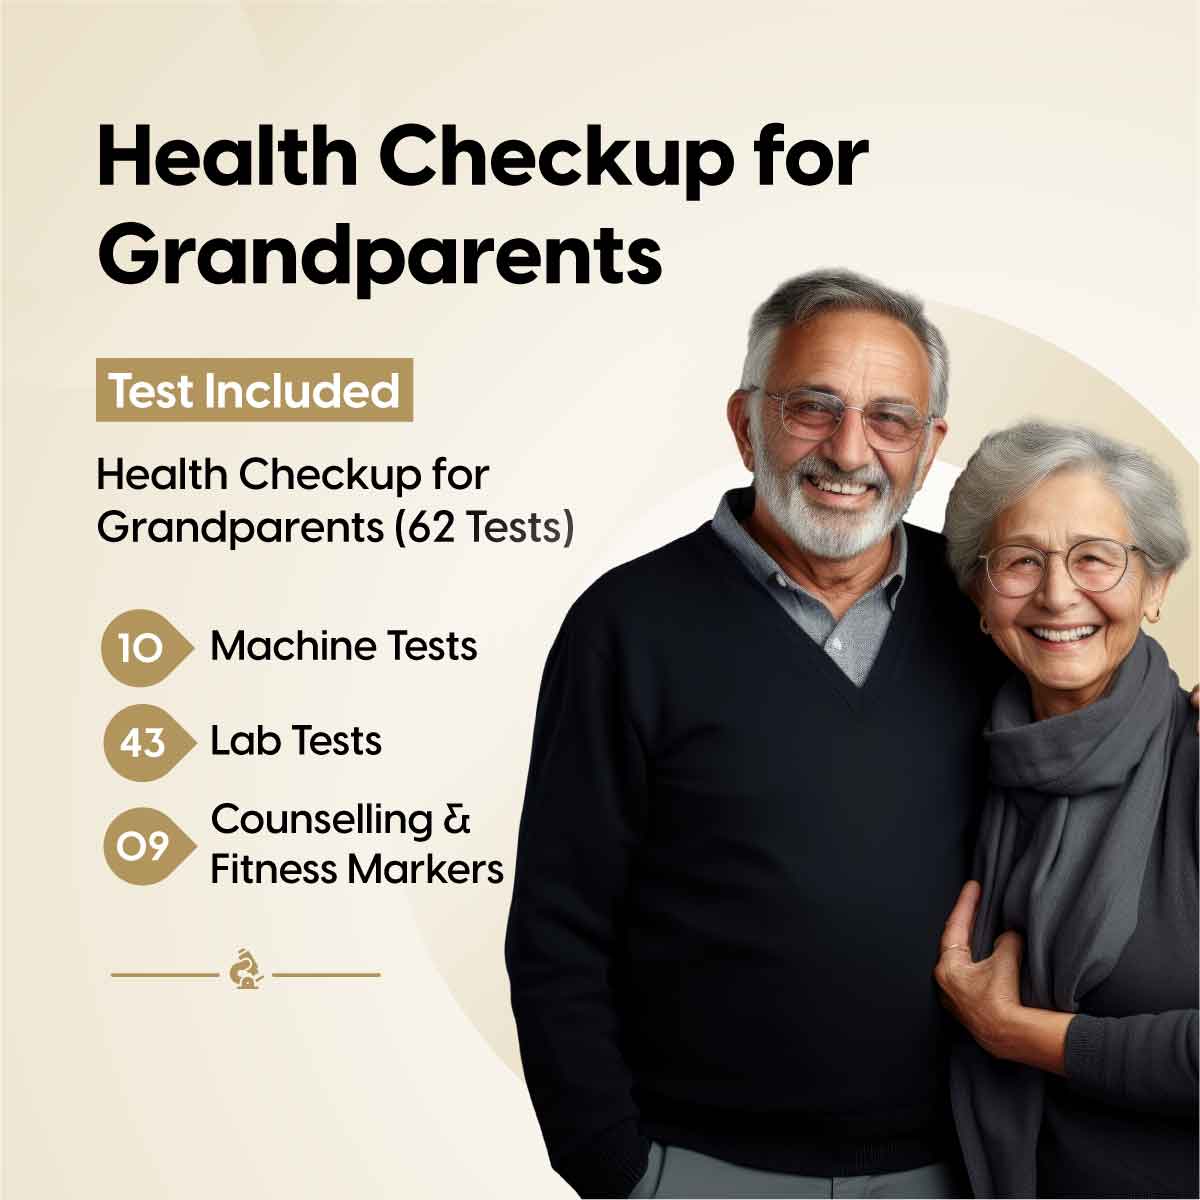 Health Checkup for Grandparents